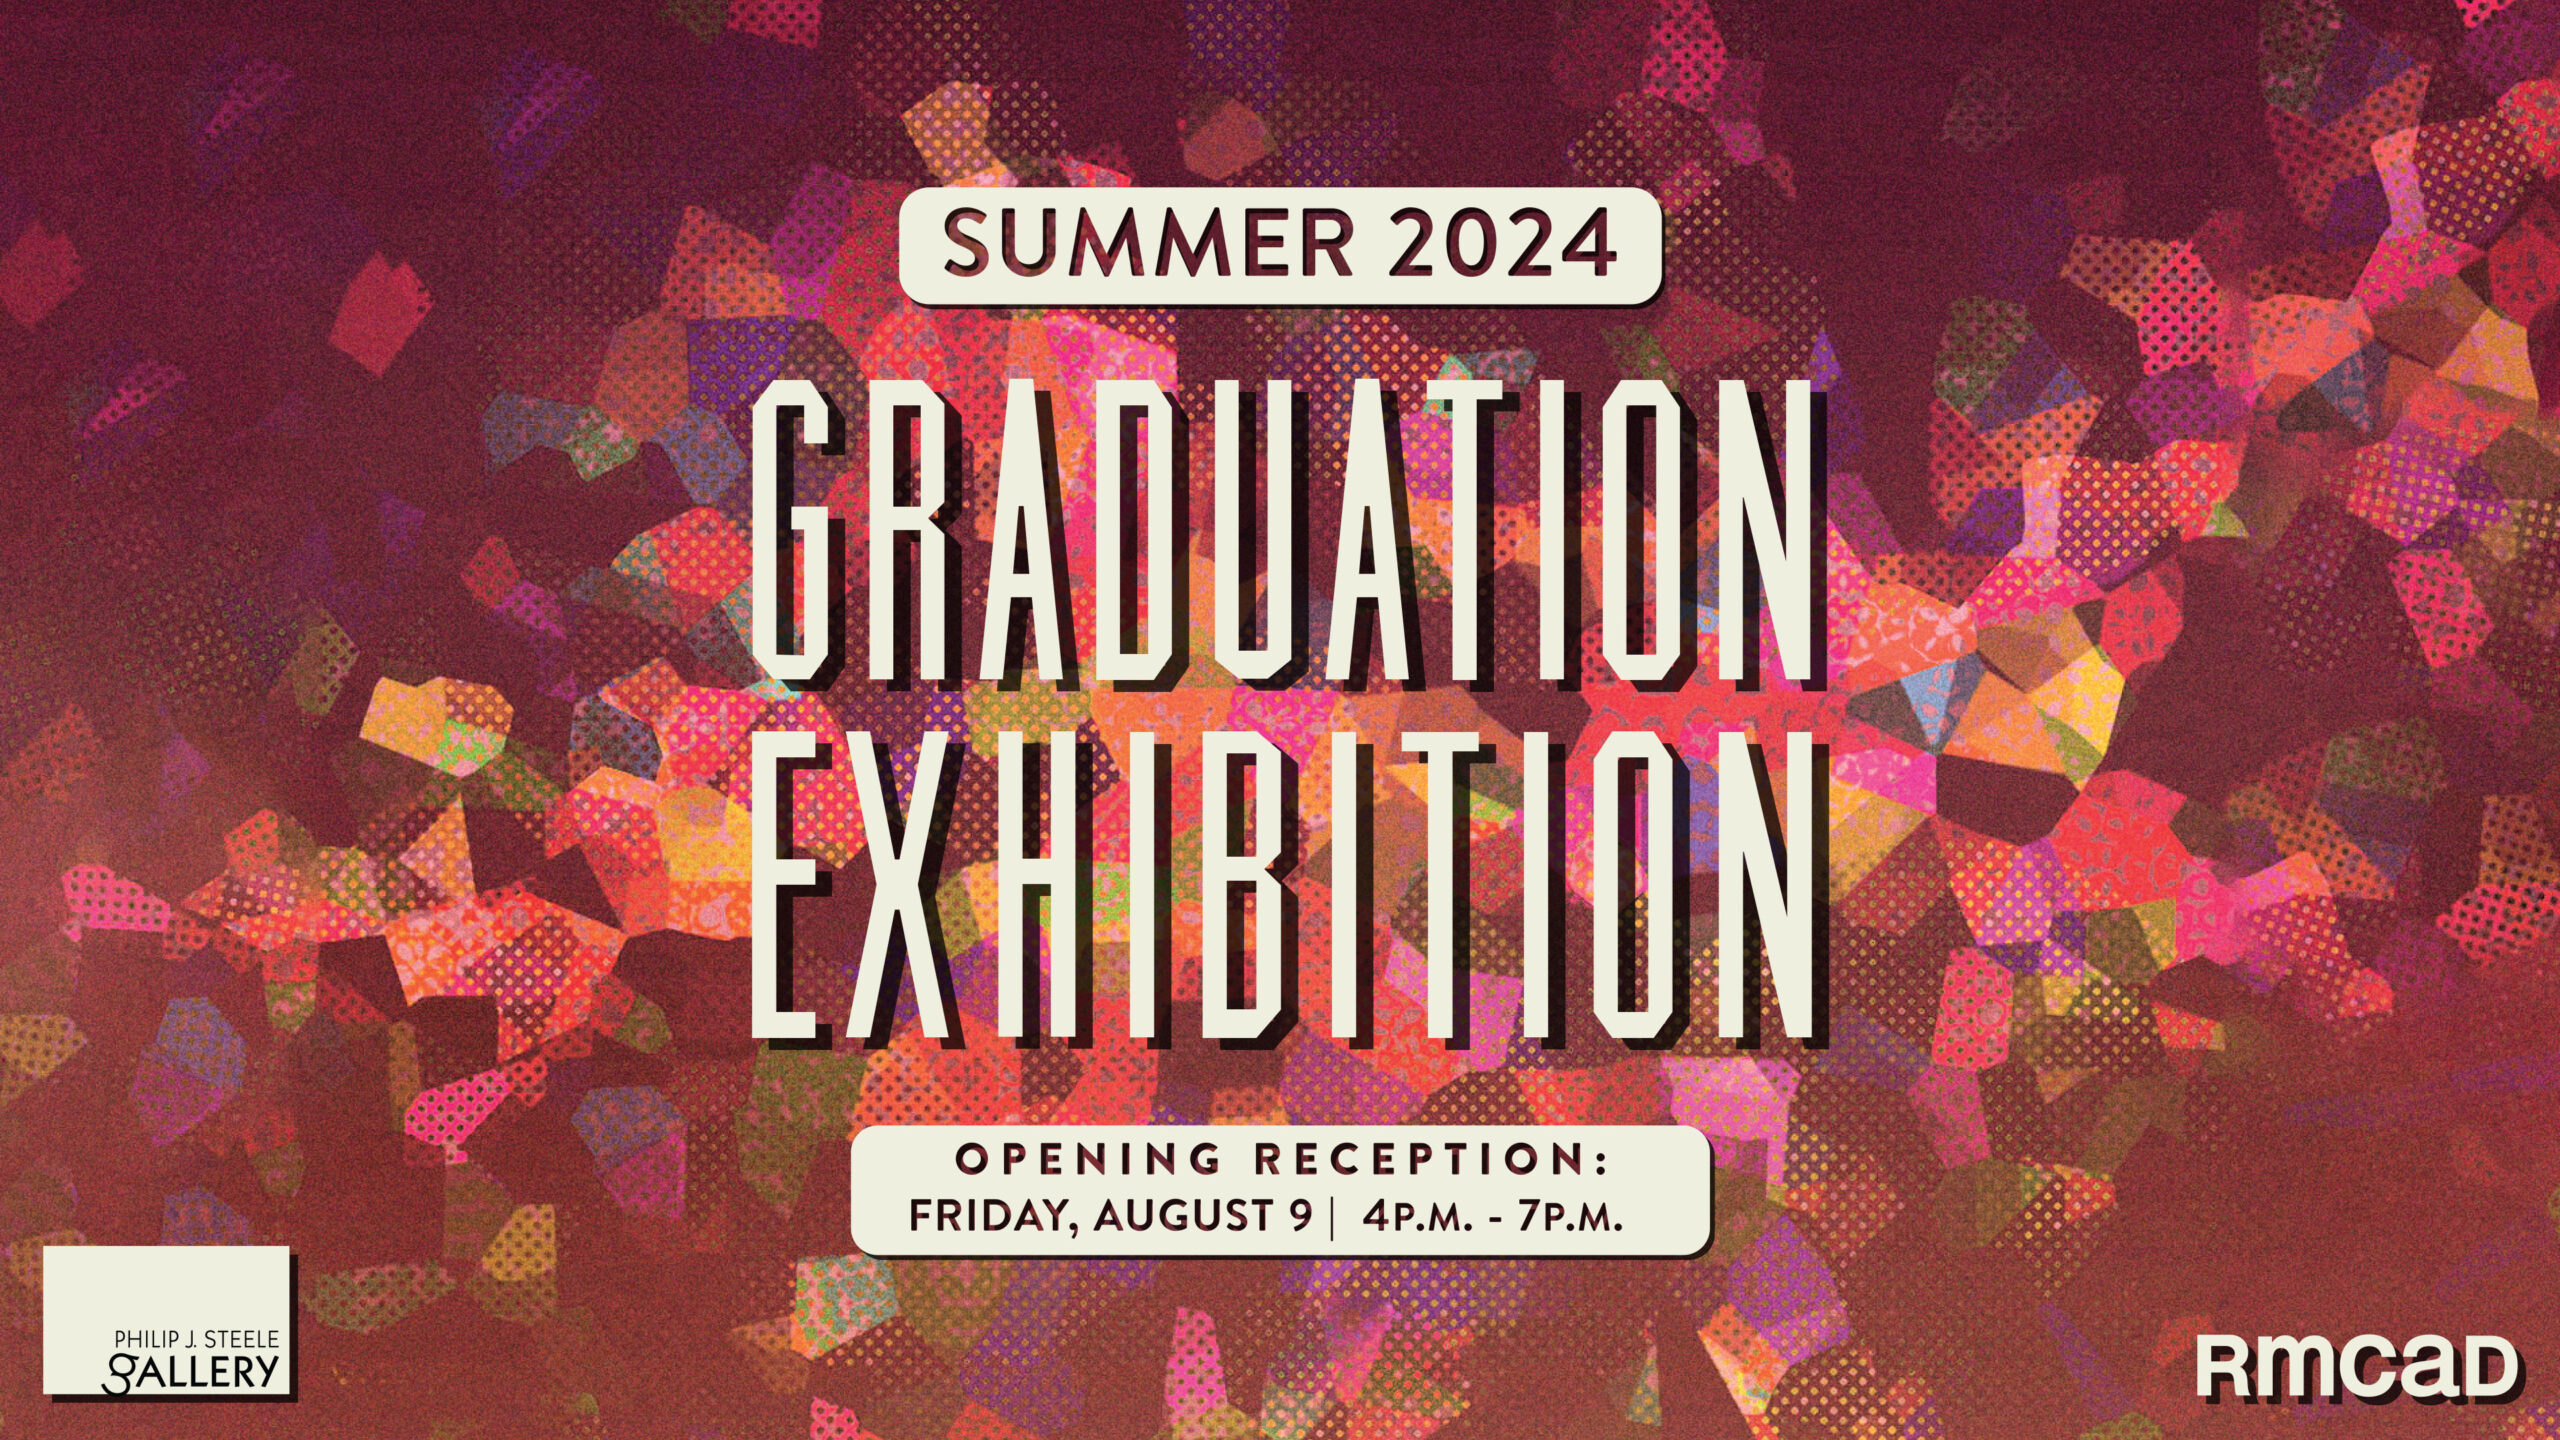 Summer 2024 Graduation Exhibition